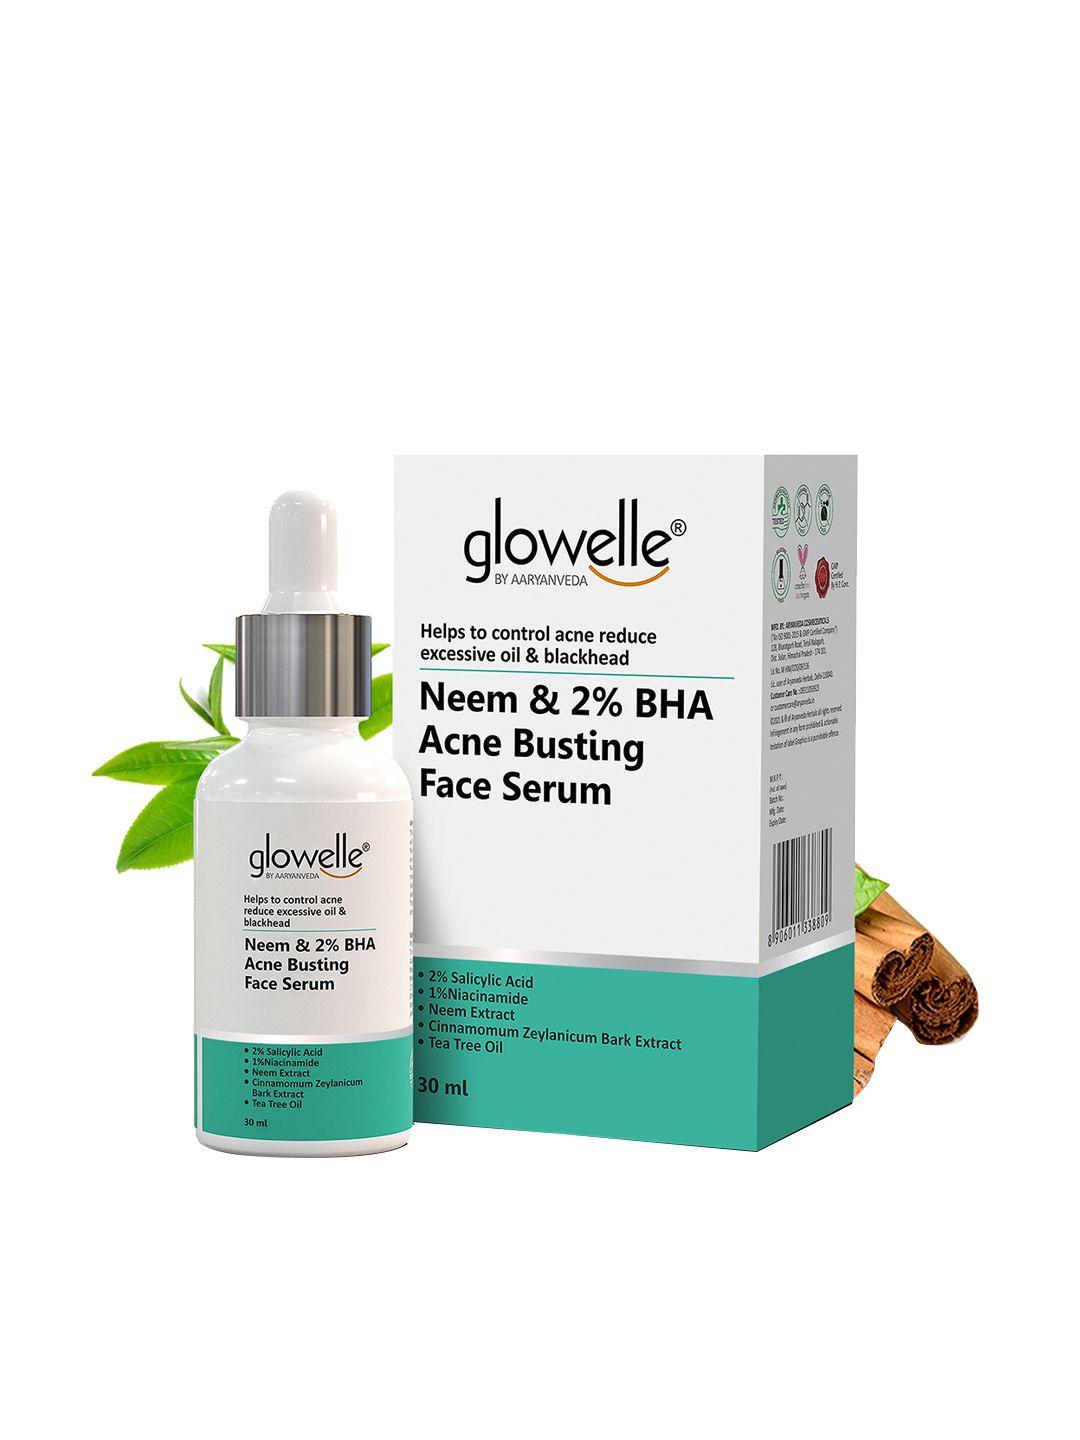 aryanveda glowelle neem & 2% bha acne busting face serum for blackheads control - 30ml